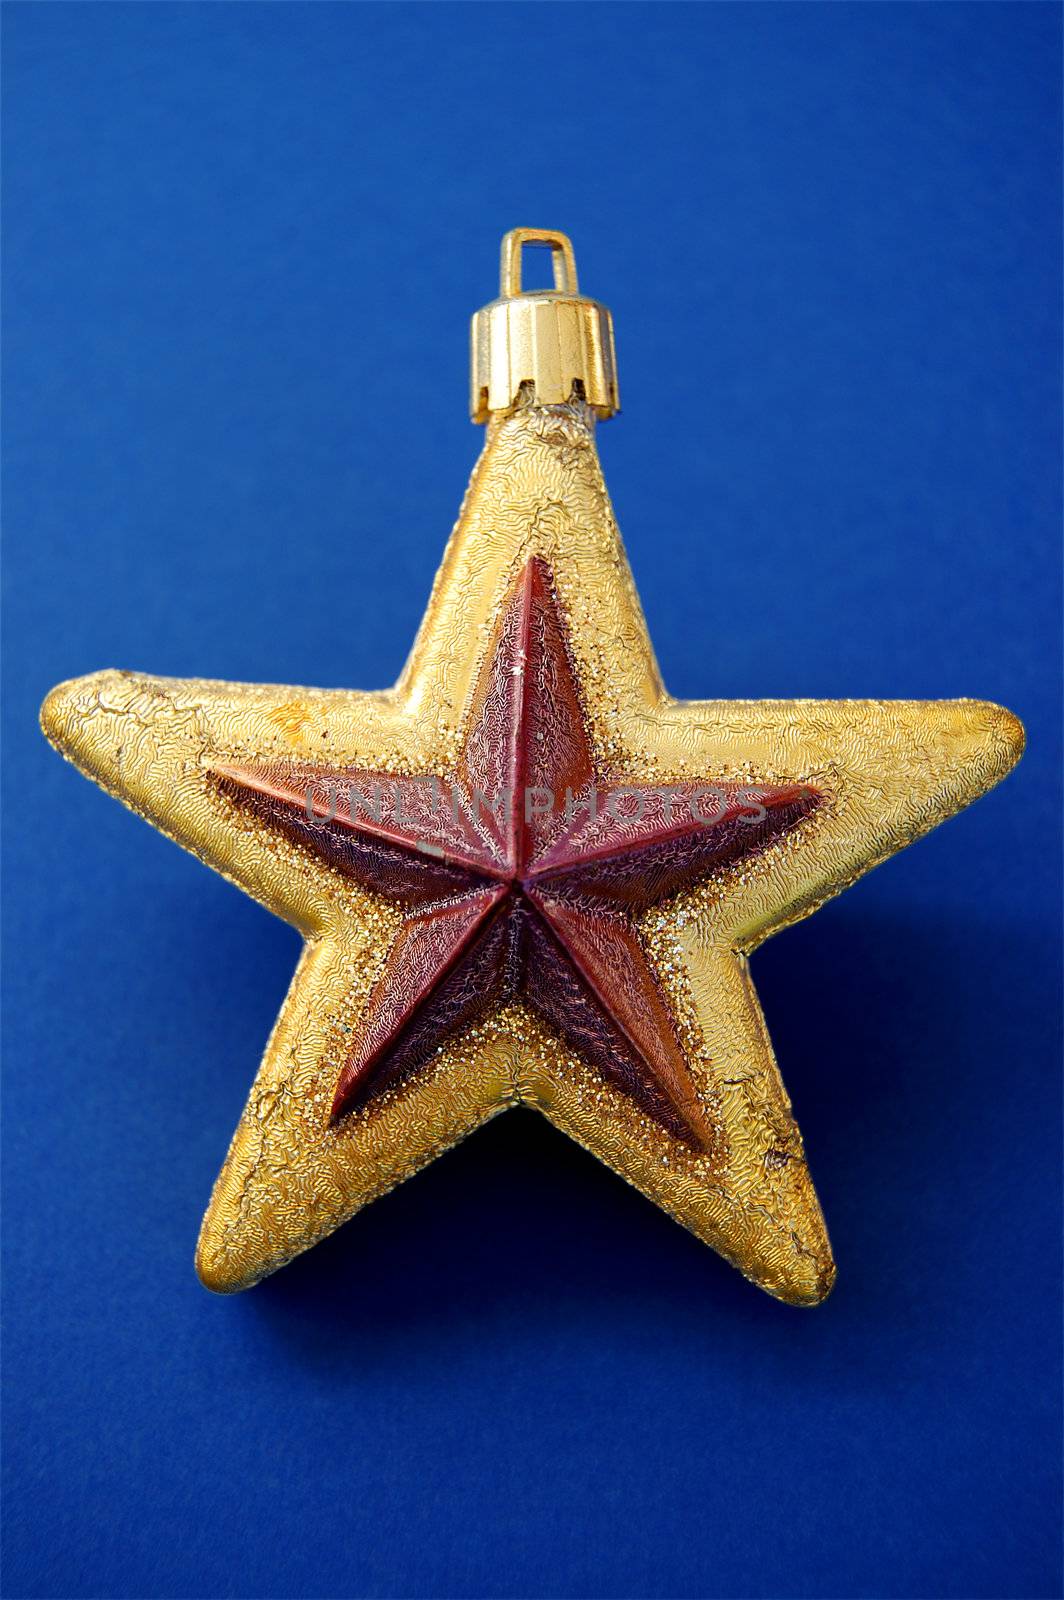 Christmas tree decoration. Golden star ornament background.